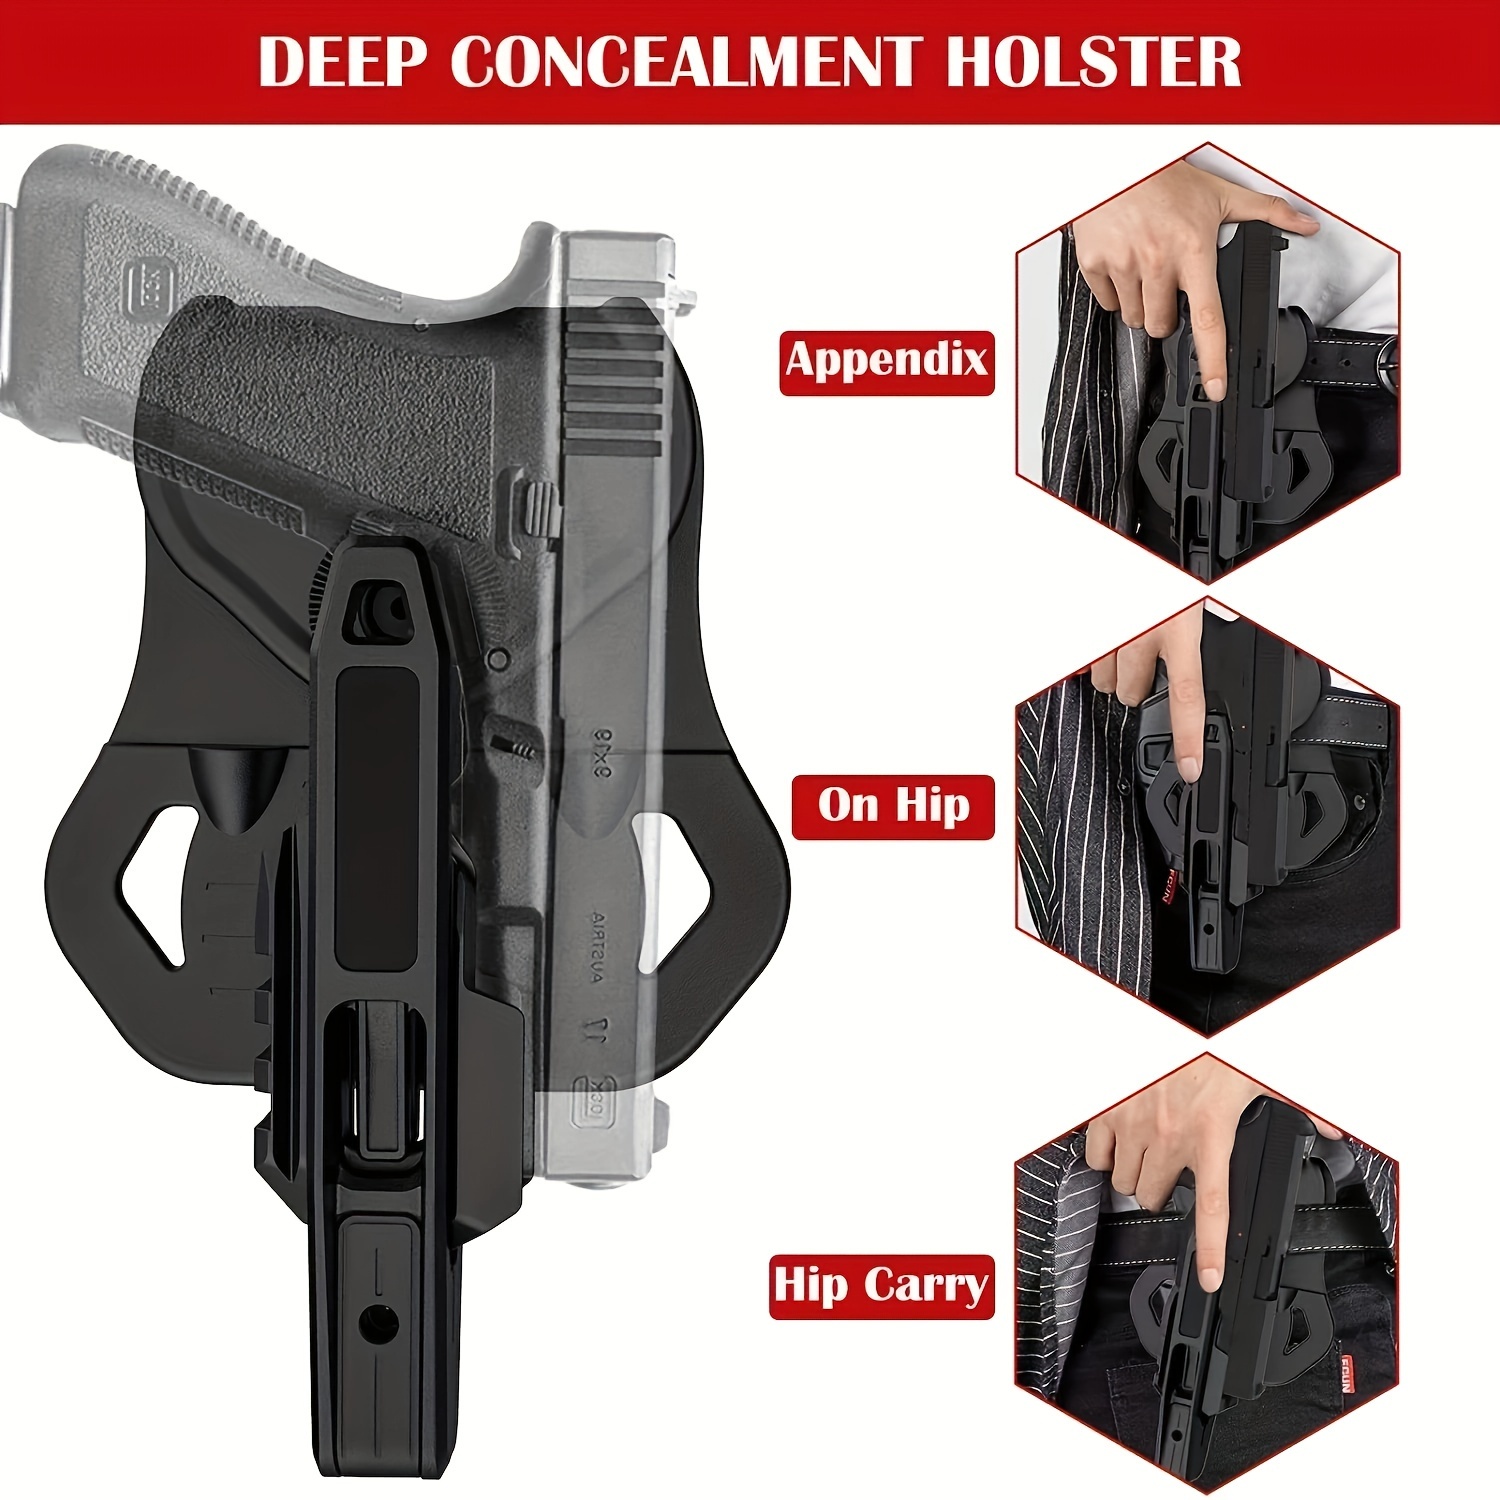  Tems Active Shoulder Holster for Concealed Carry